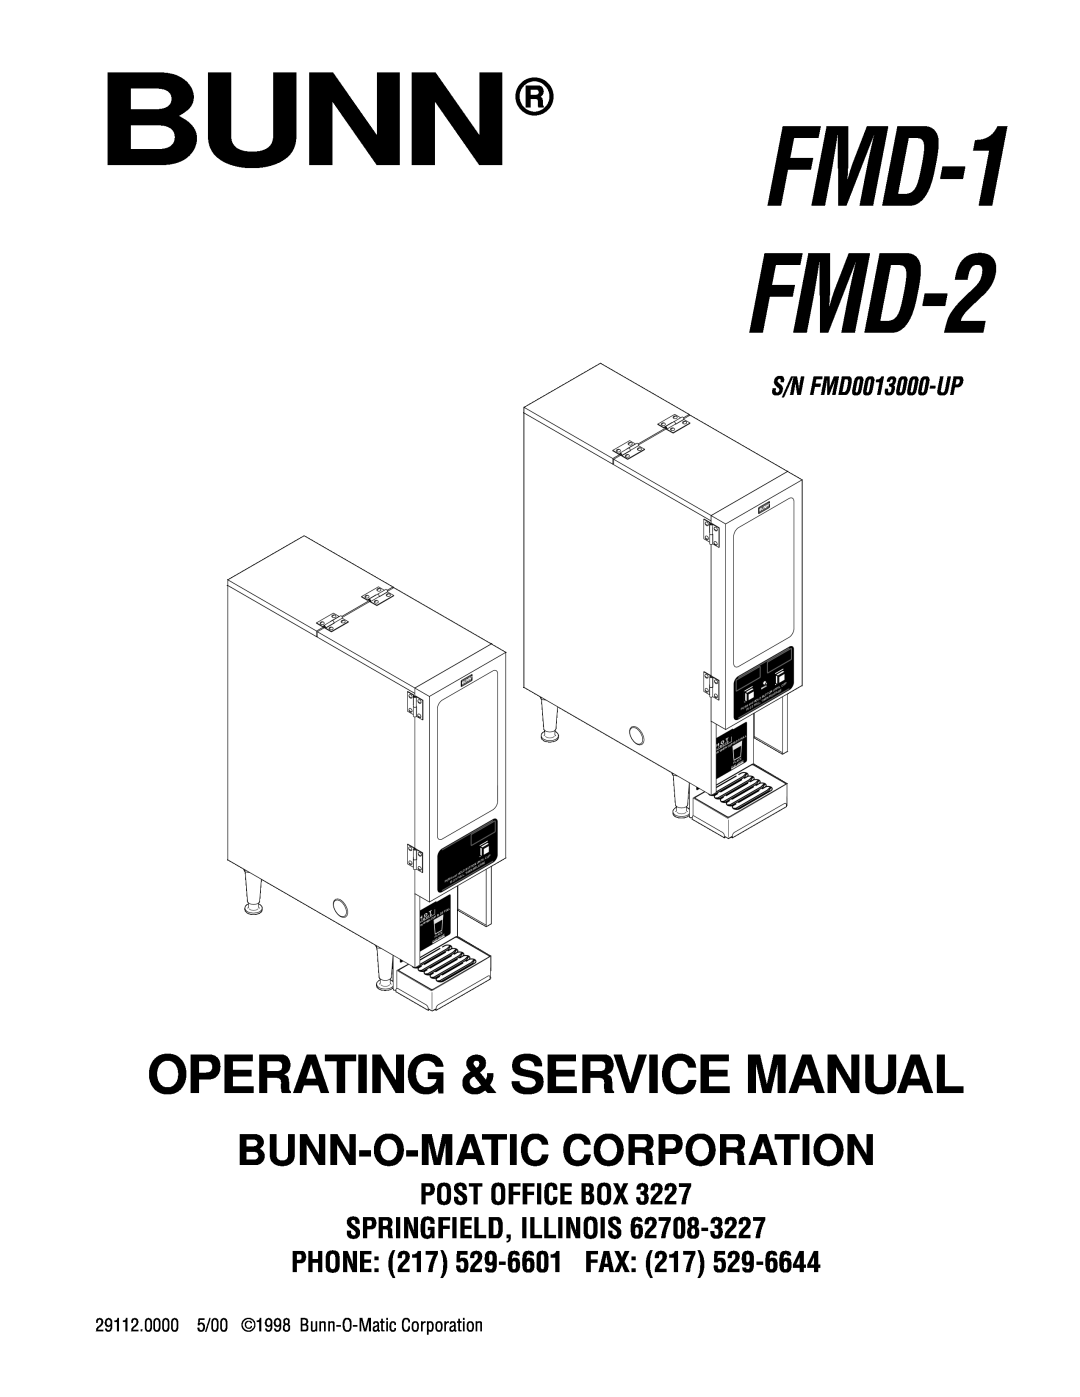 Bunn service manual BUNNFMD-1 FMD-2, Bunn-O-Maticcorporation, Post Office Box Springfield, Illinois, S/N FMD0013000-UP 